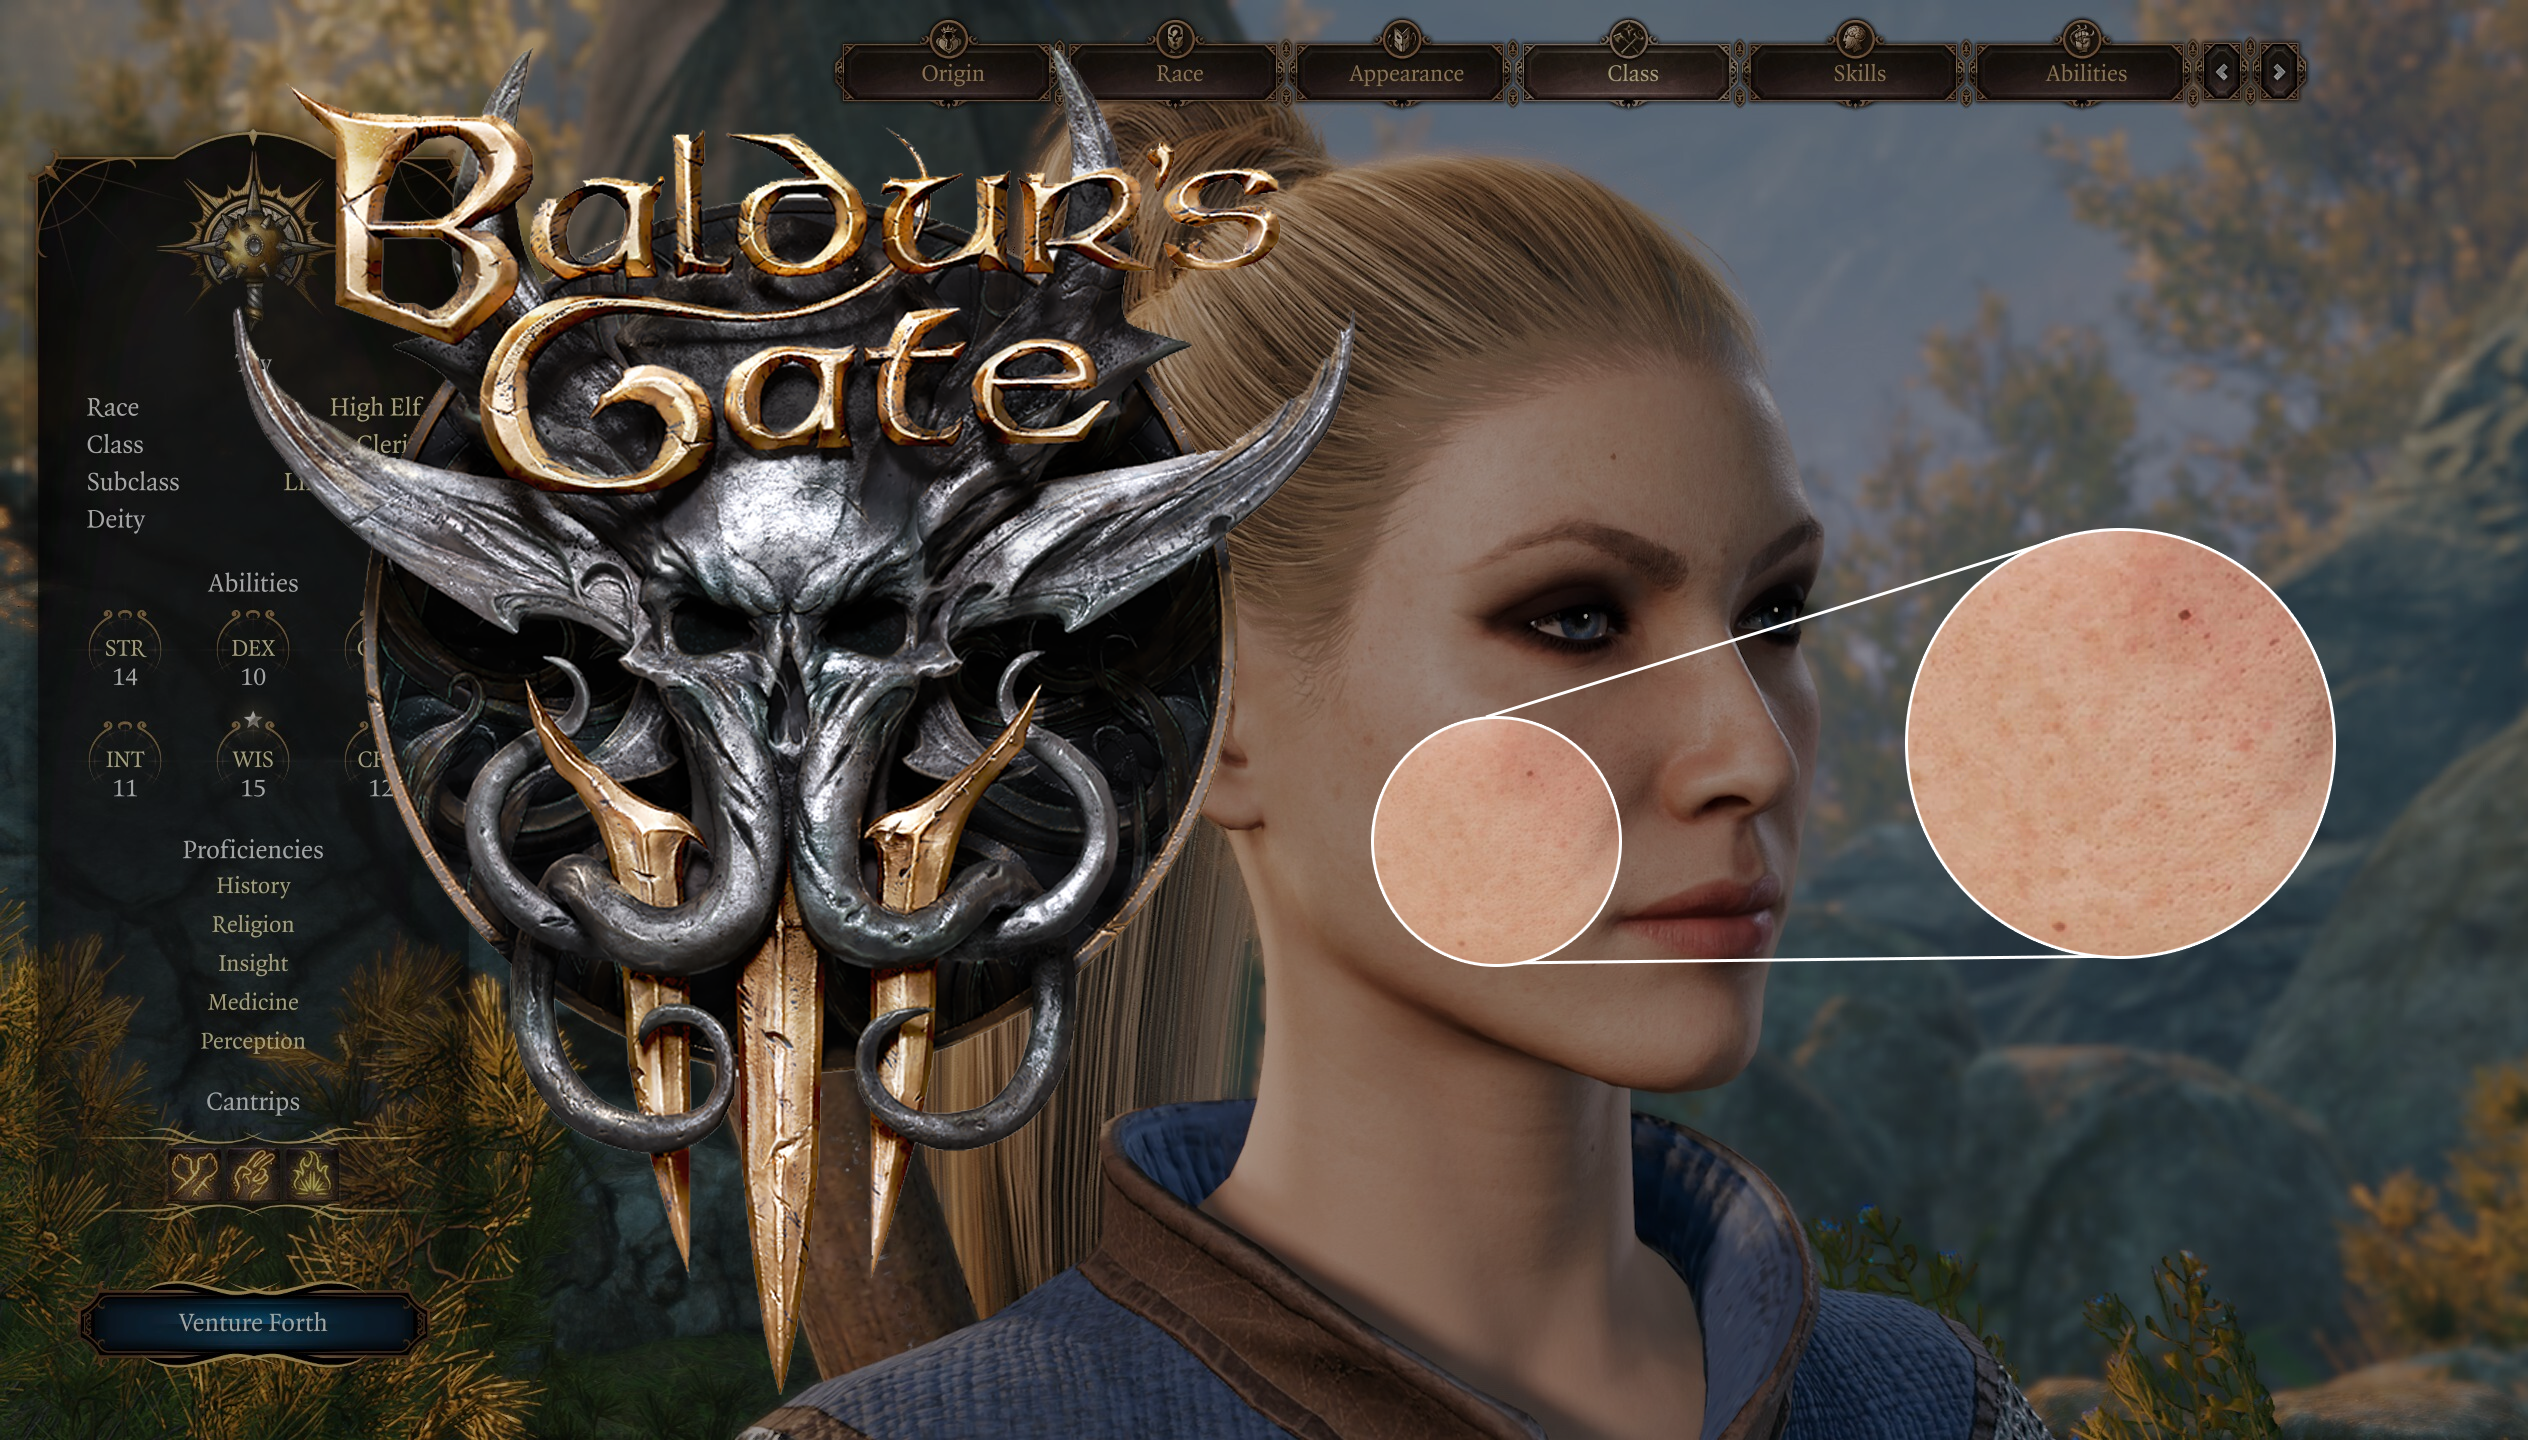 Baldur’s Gate 3 Shows Off Its Character Creation